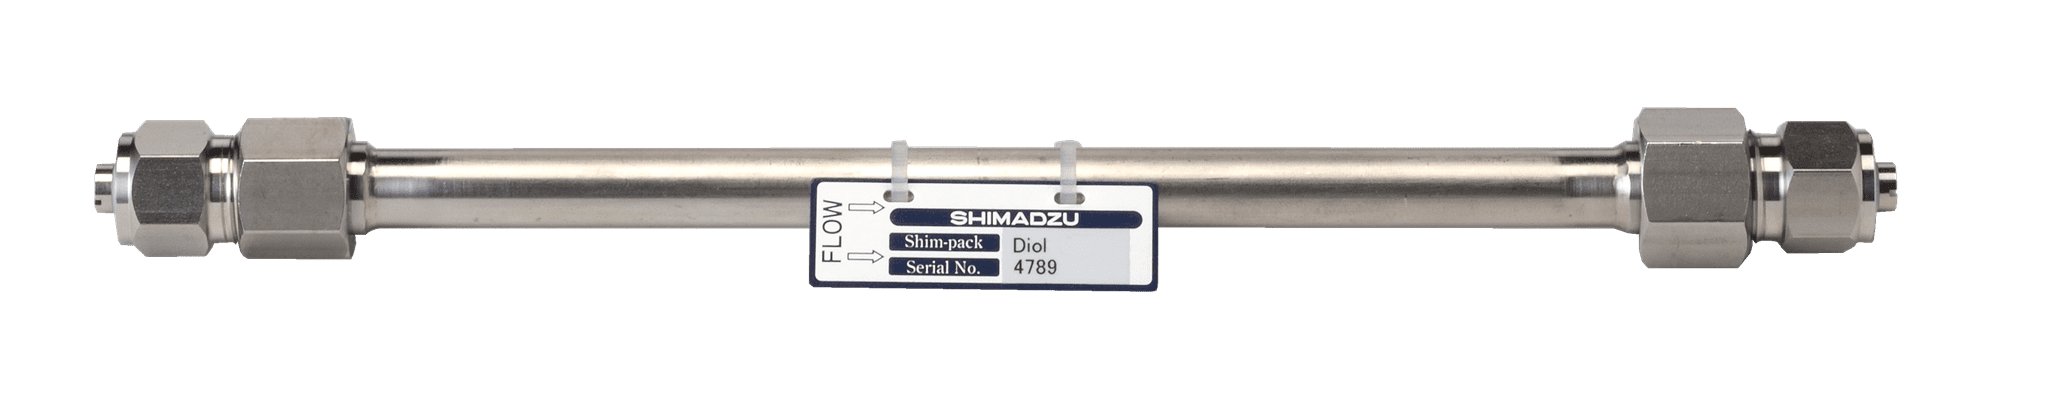 Obrázek Shim-pack Diol-150; 5 µm; 250 x 7.9